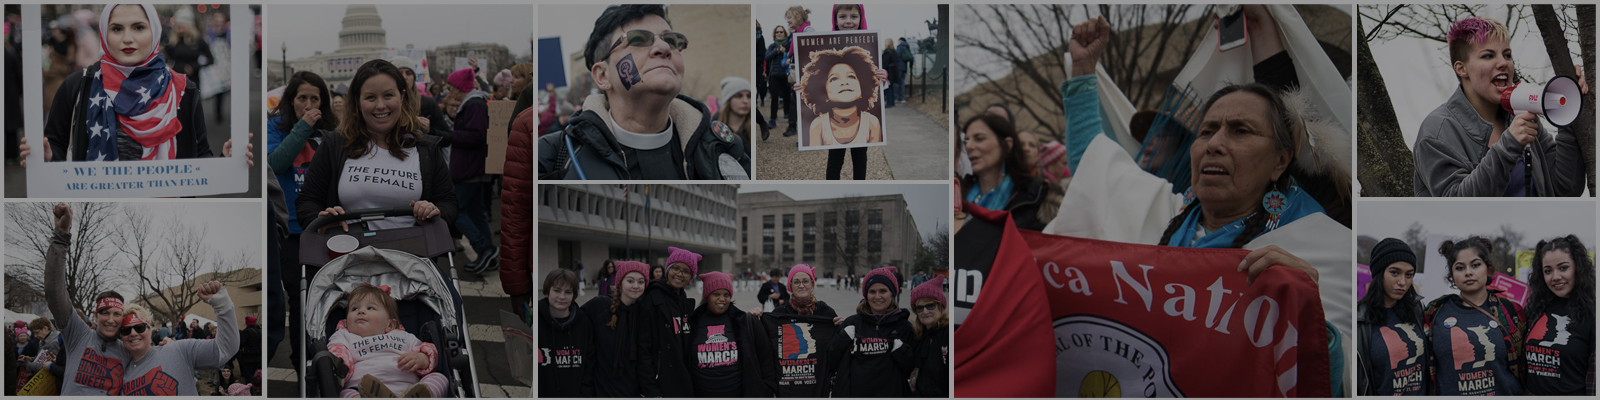 Women's March on Boston/Cambridge